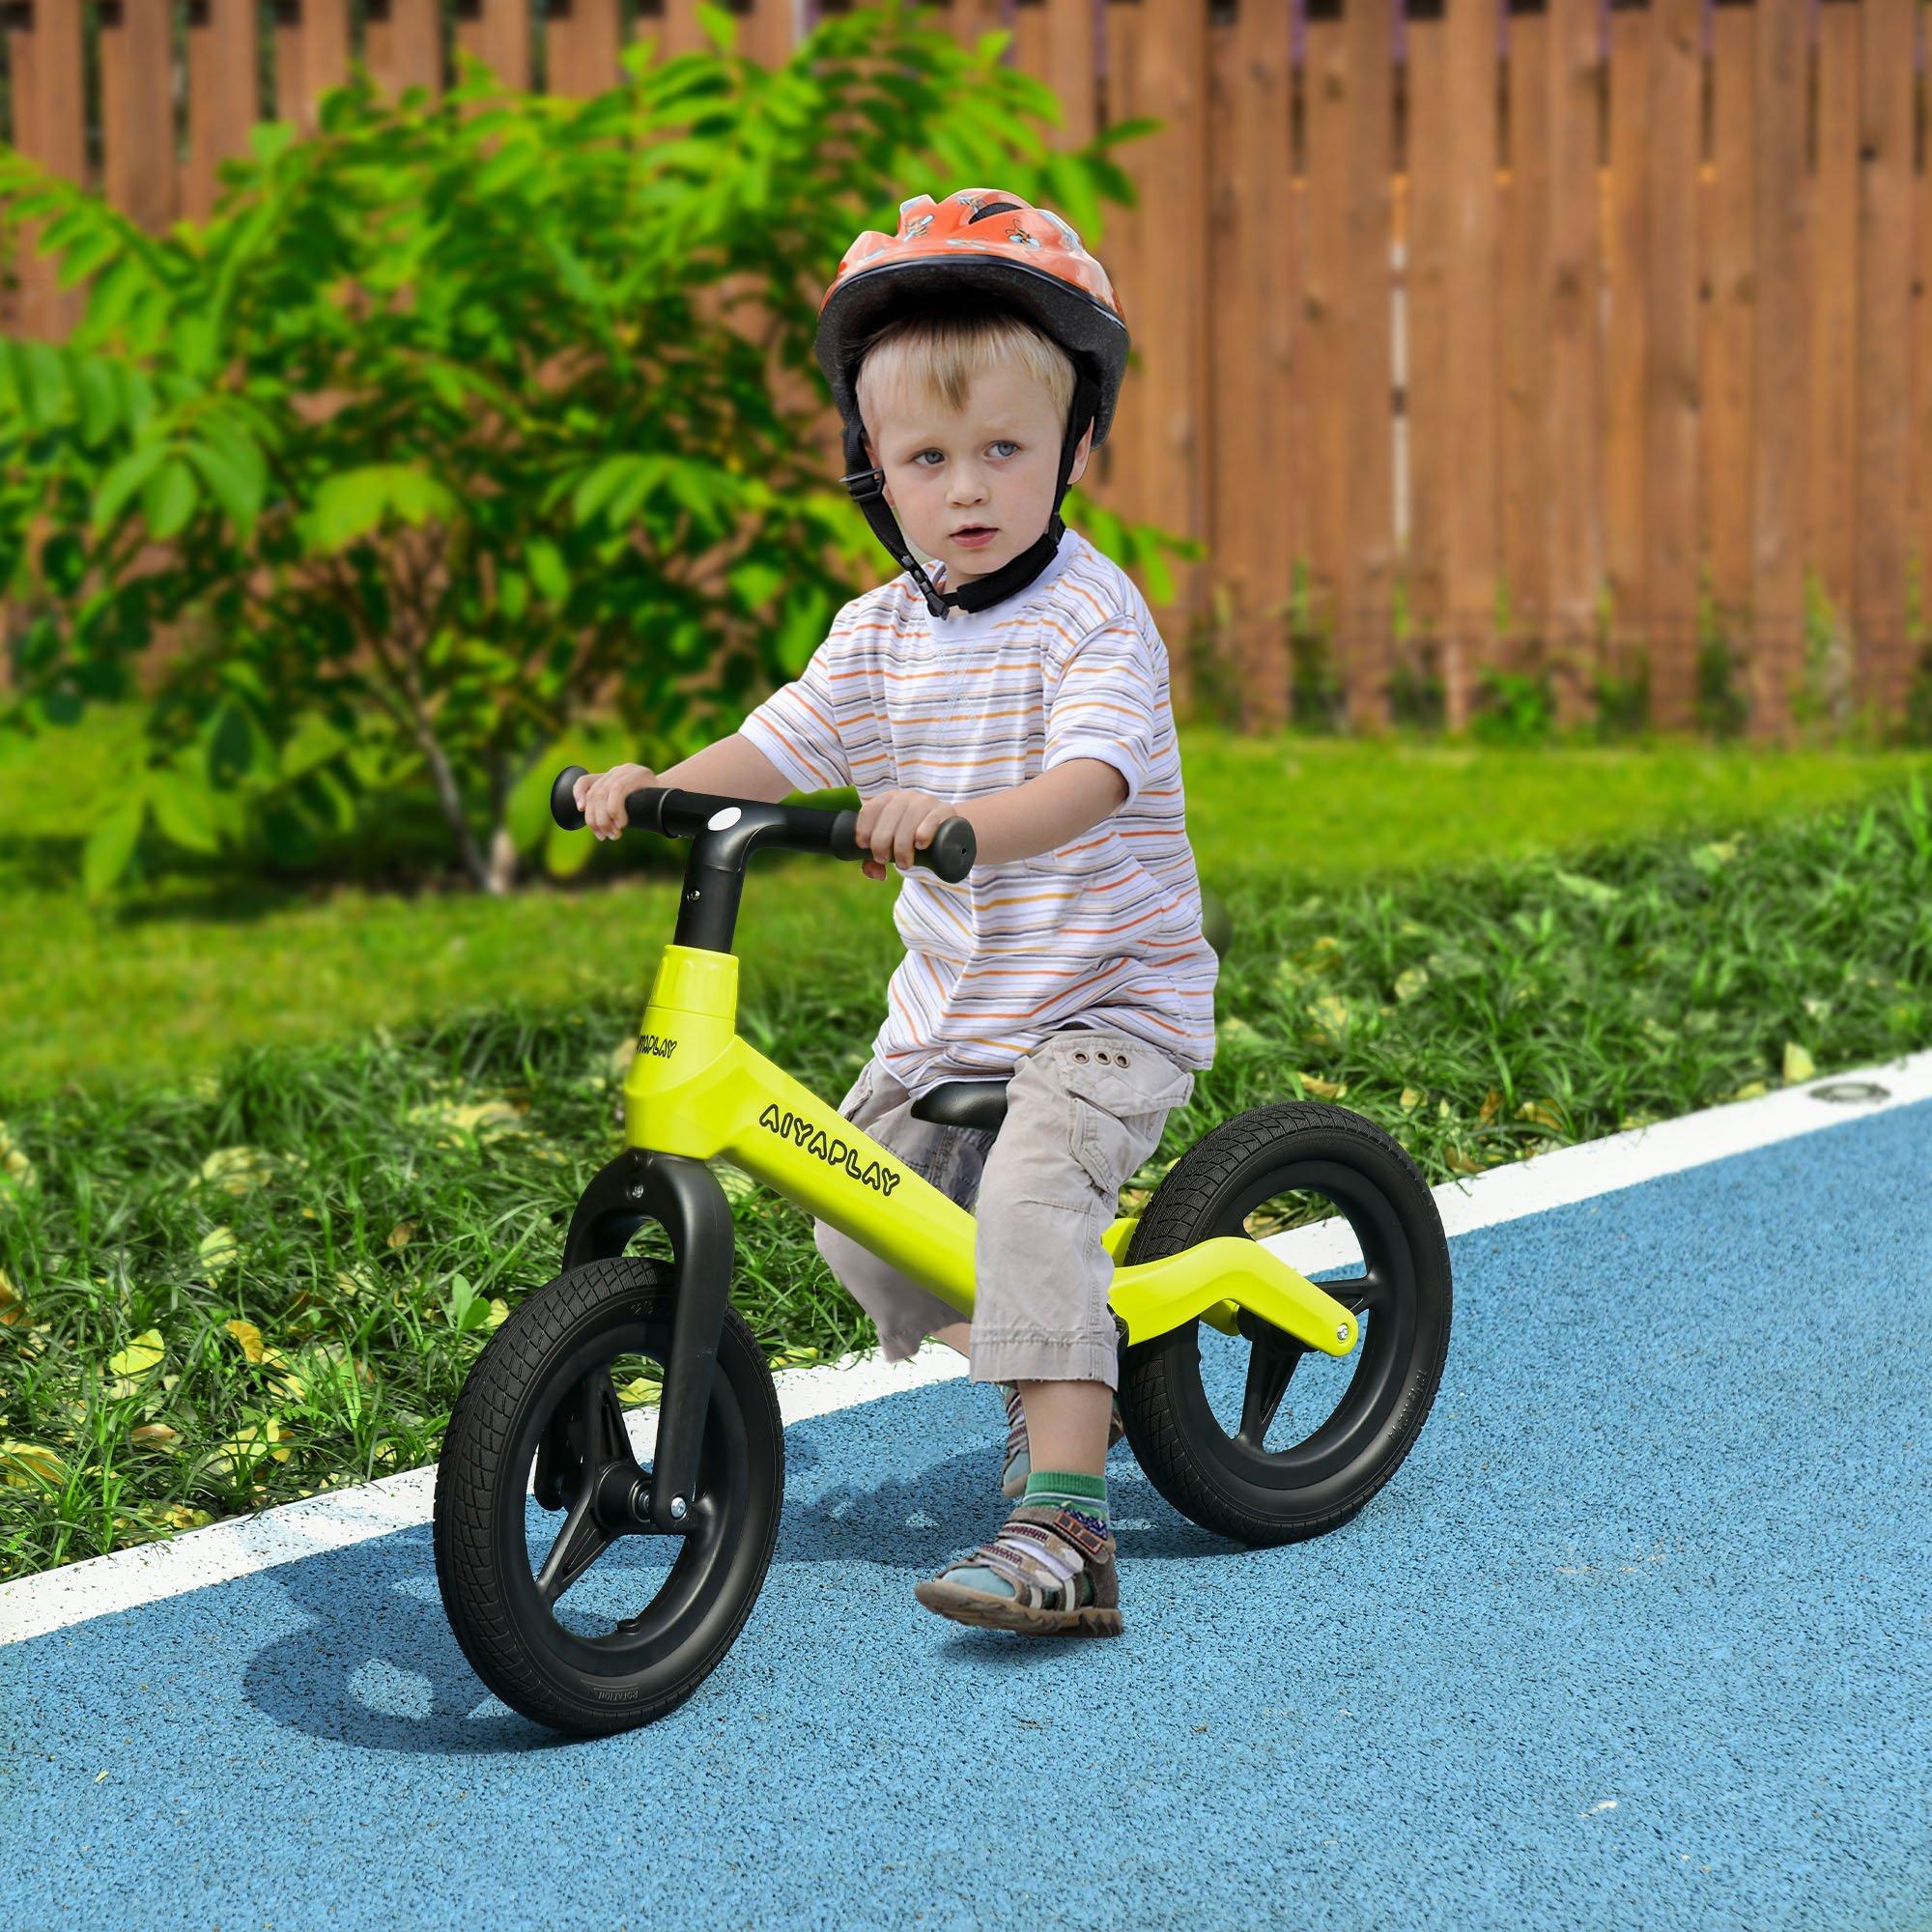 Baby Balance Bike, Training Bike w/ Adjustable Seat and Handlebar